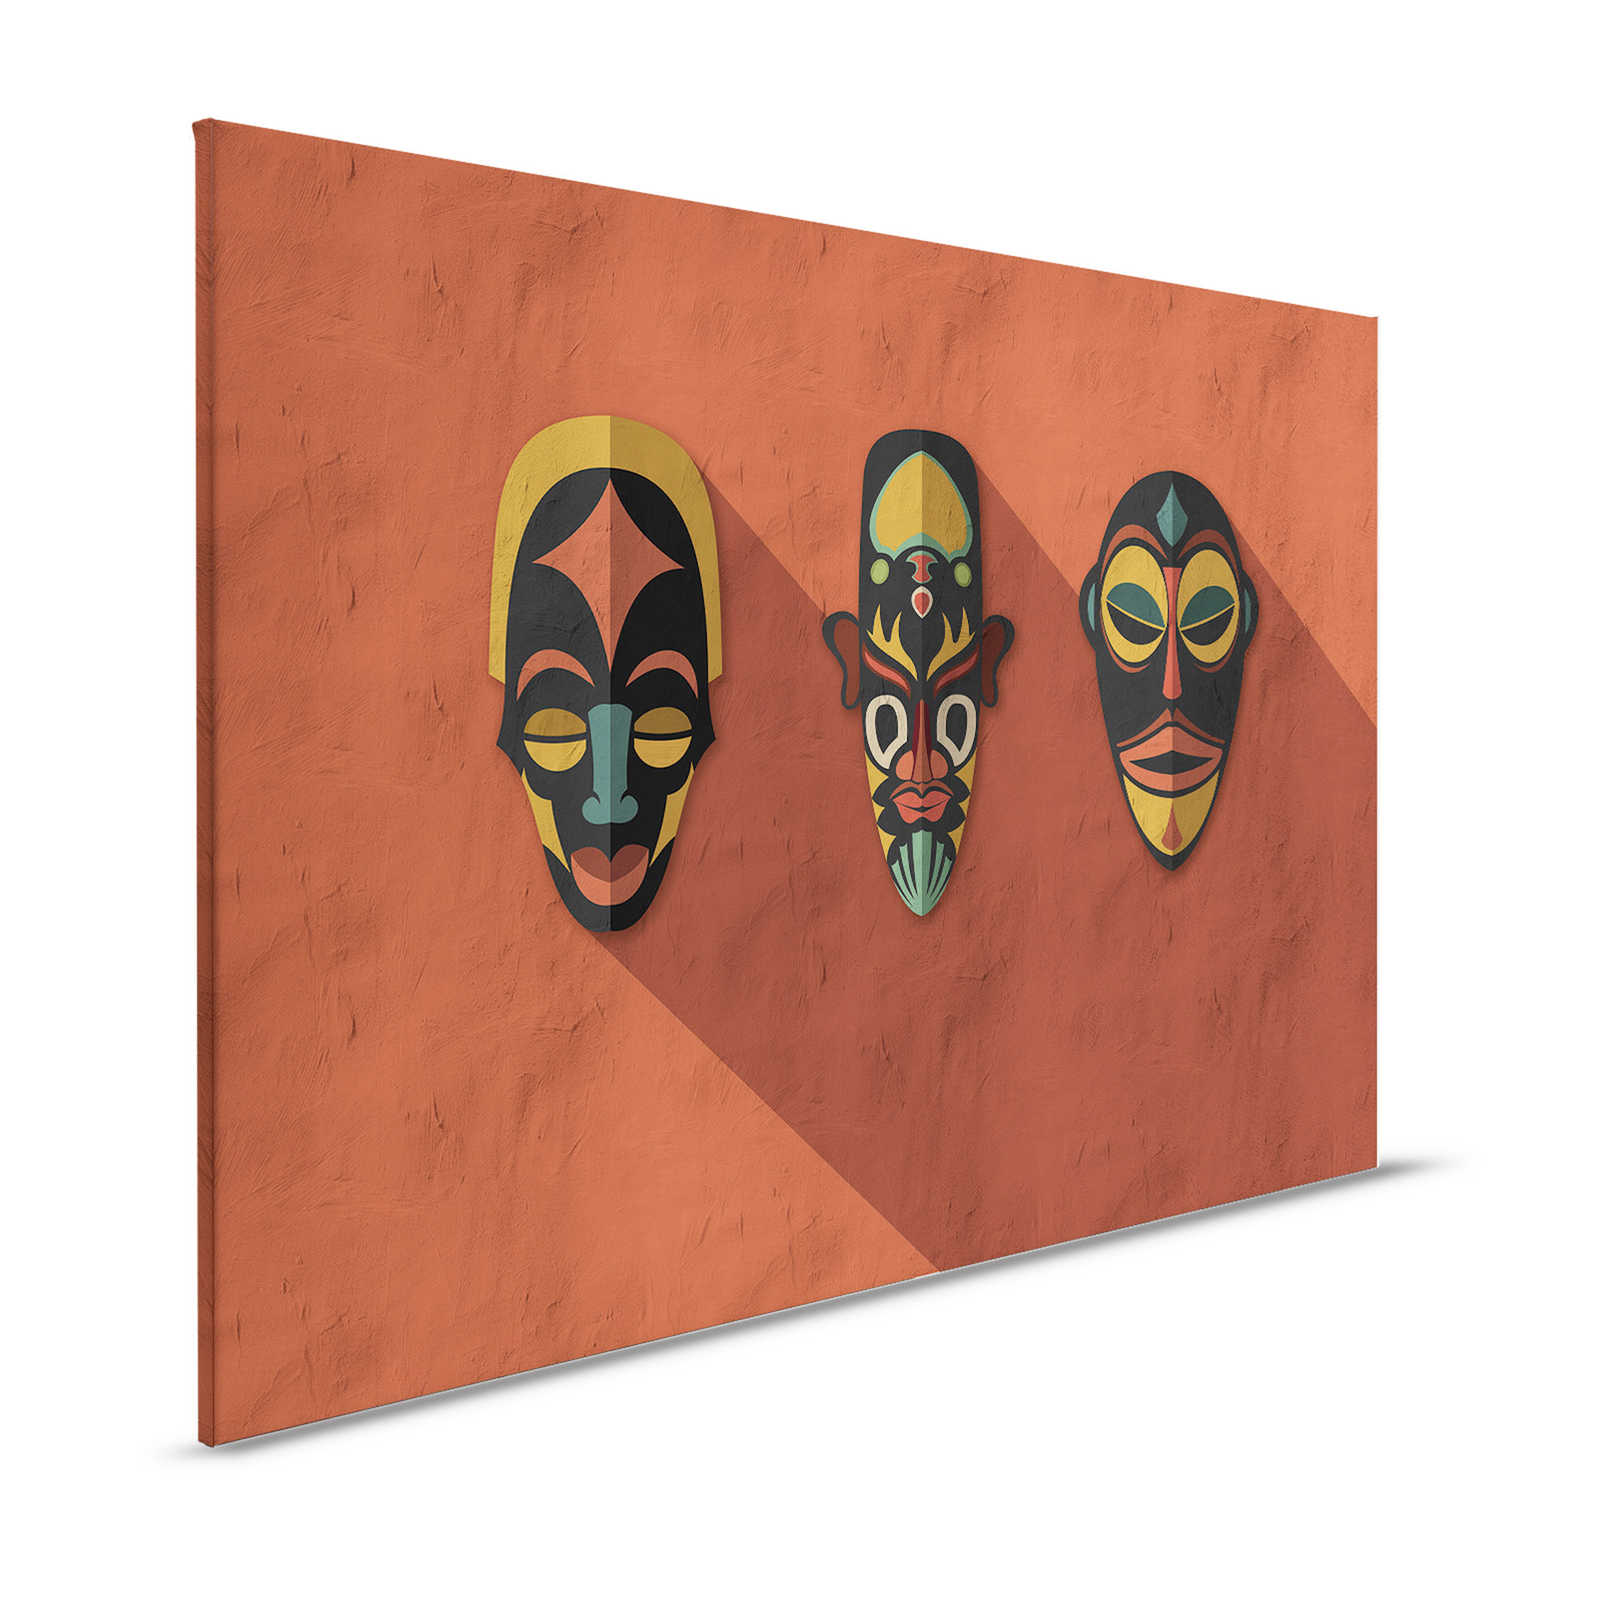 Zulu 2 - Canvas painting Terracotta Orange, Africa Masks Zulu Design - 1.20 m x 0.80 m
